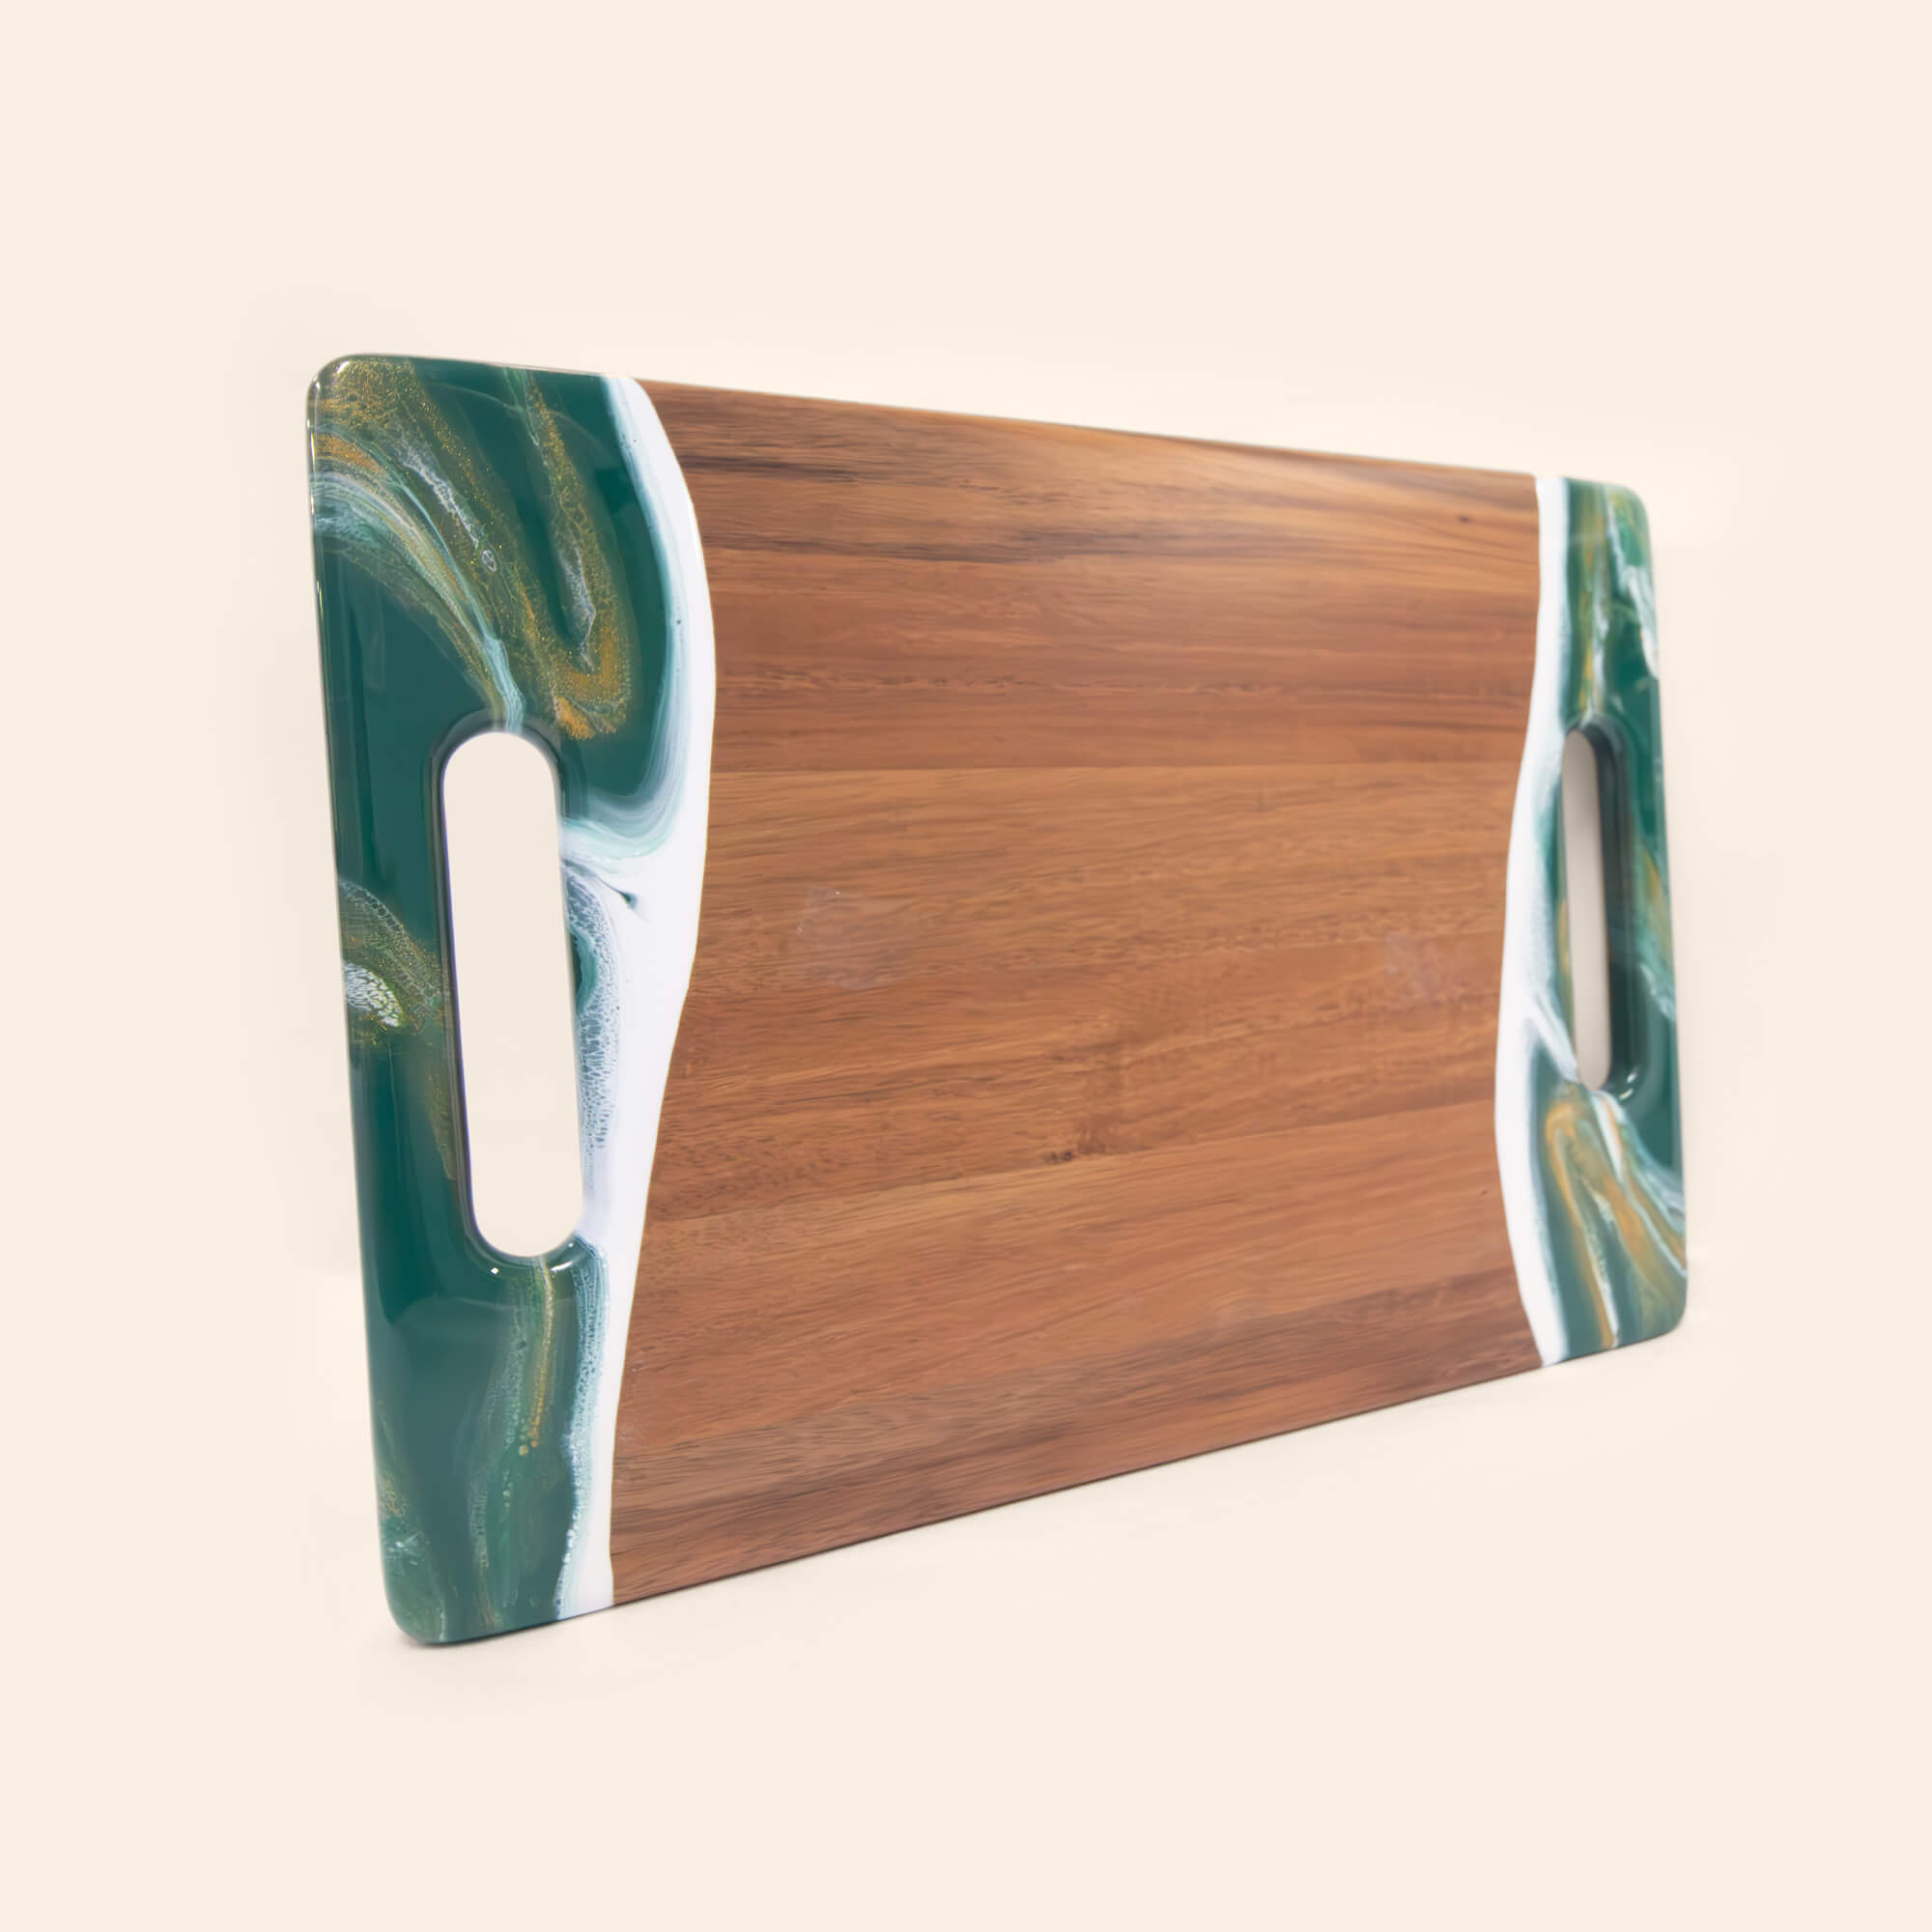 XL Rectangle Acacia Board With 2 Handles